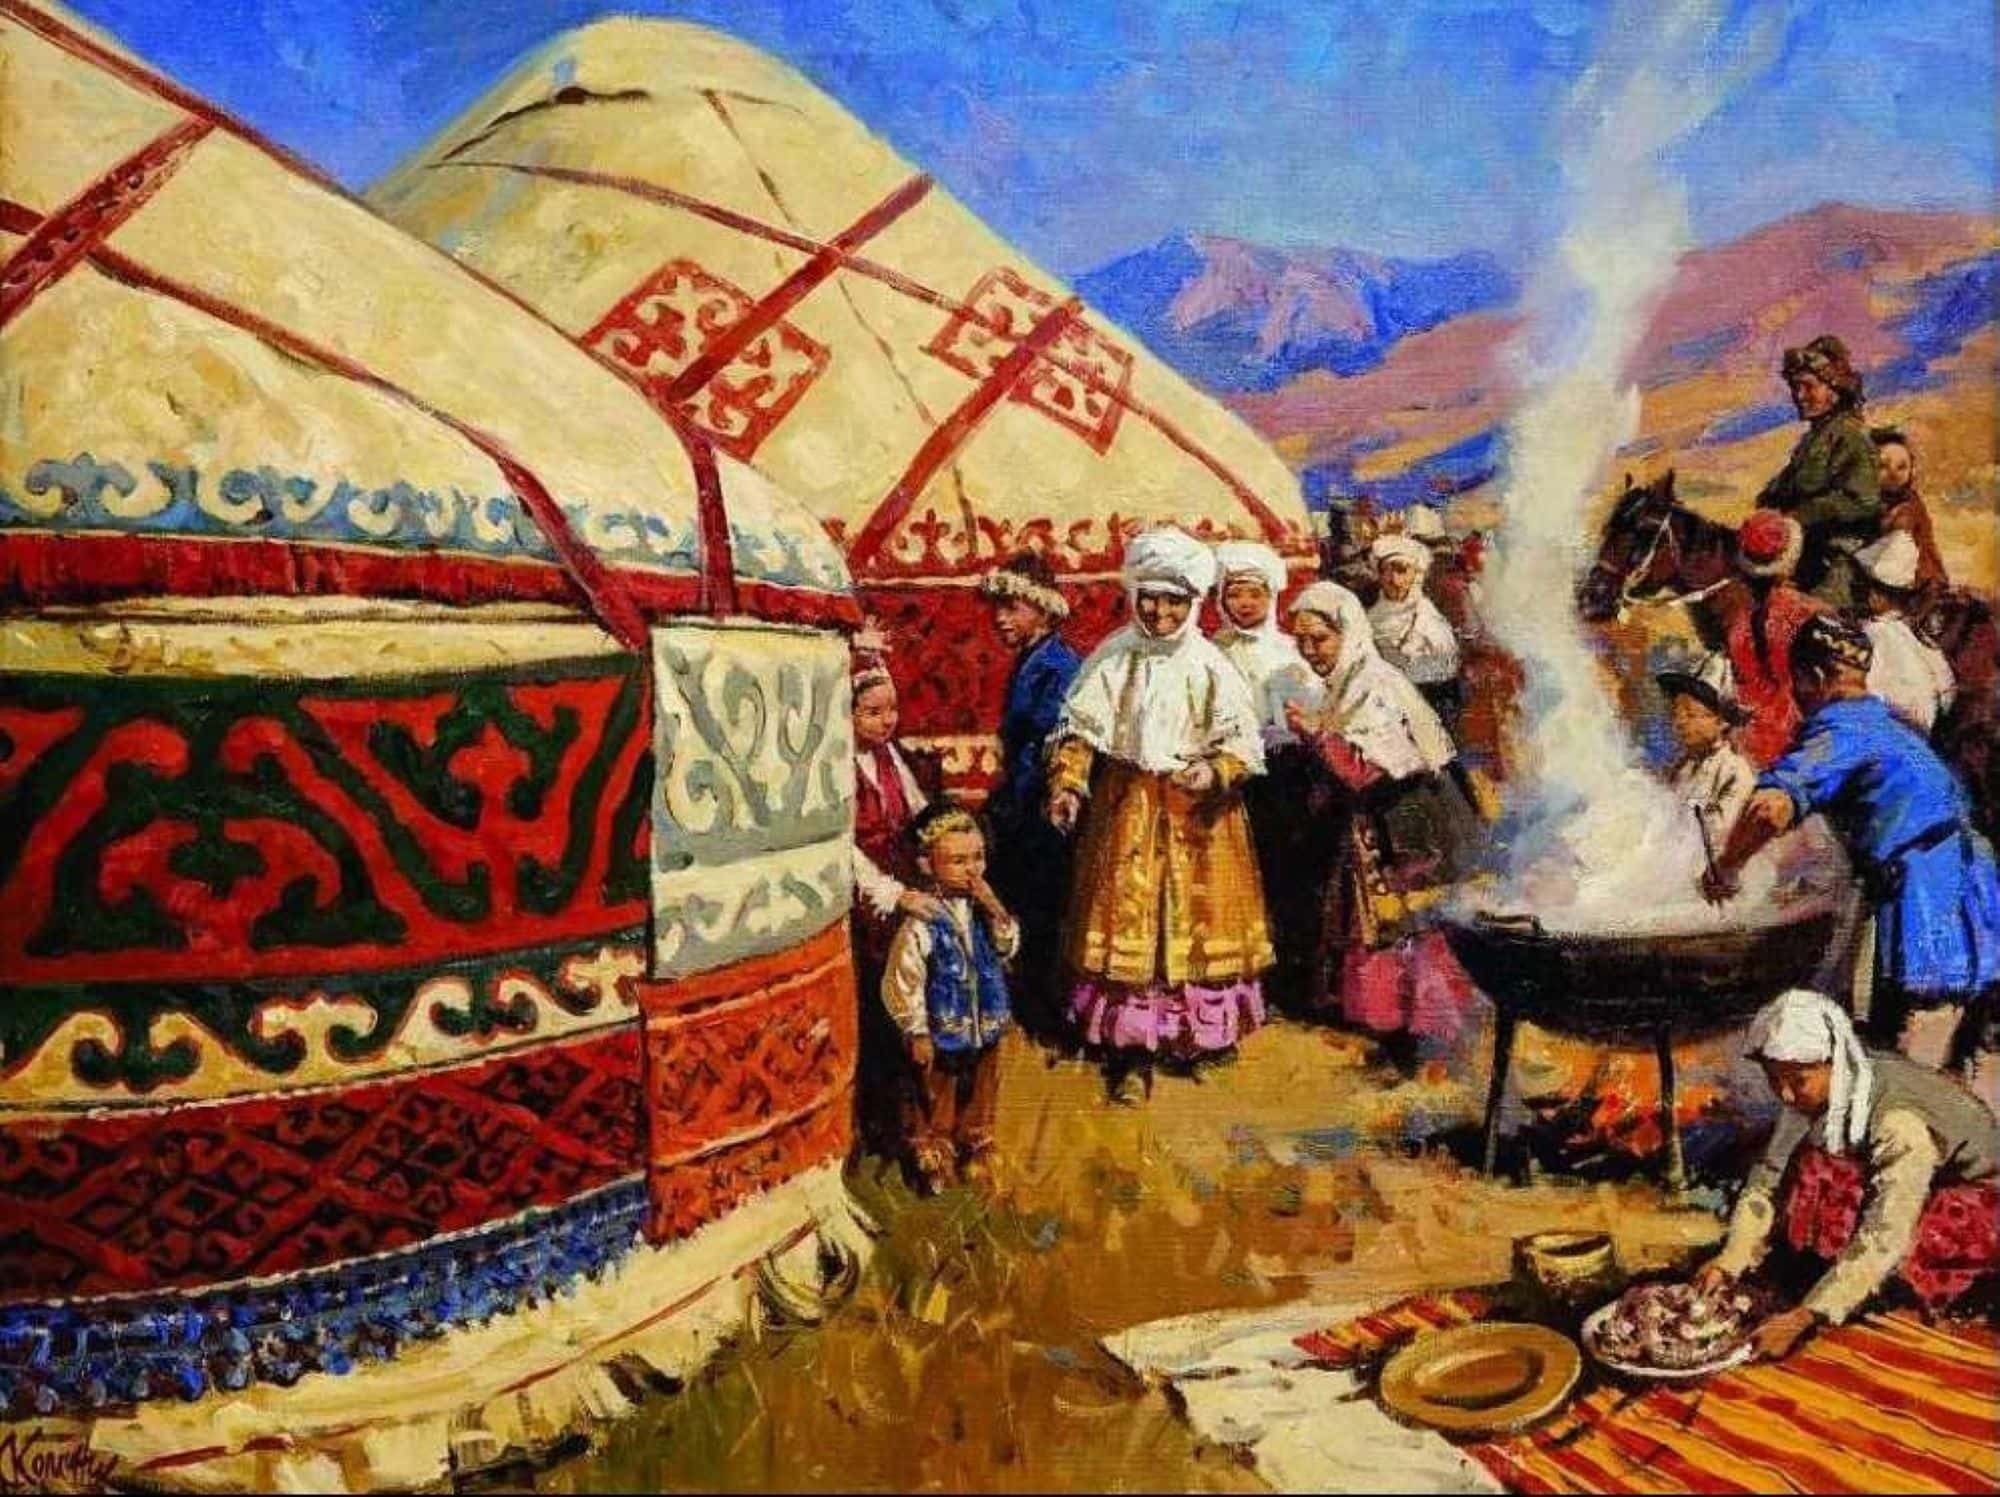 Kazakh traditions. Культура казахов. Казахстан культура и традиции. Казахский народ. Традиционная культура казахов.